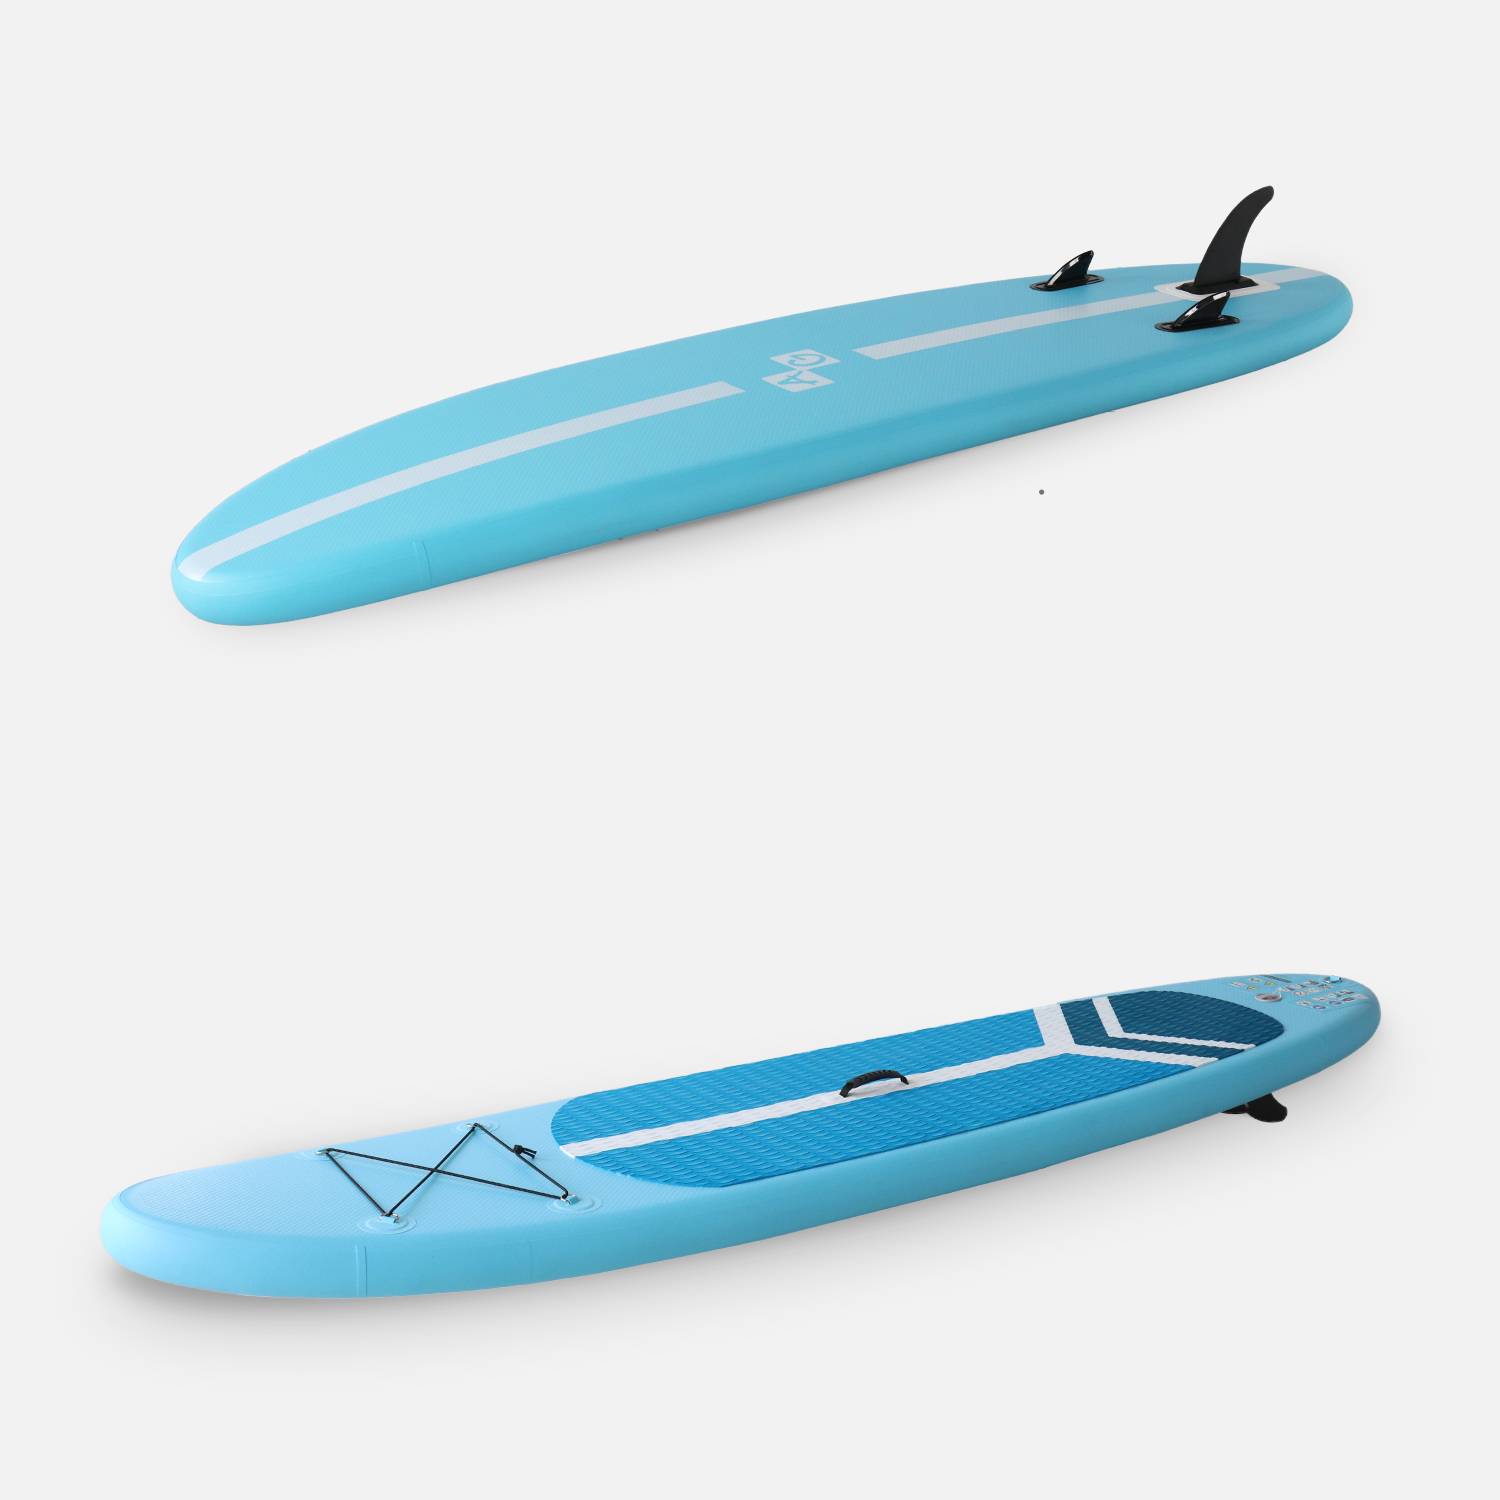 Bolina Tavola stand up paddle sup gonfiabile per bambini 8'6 260cm